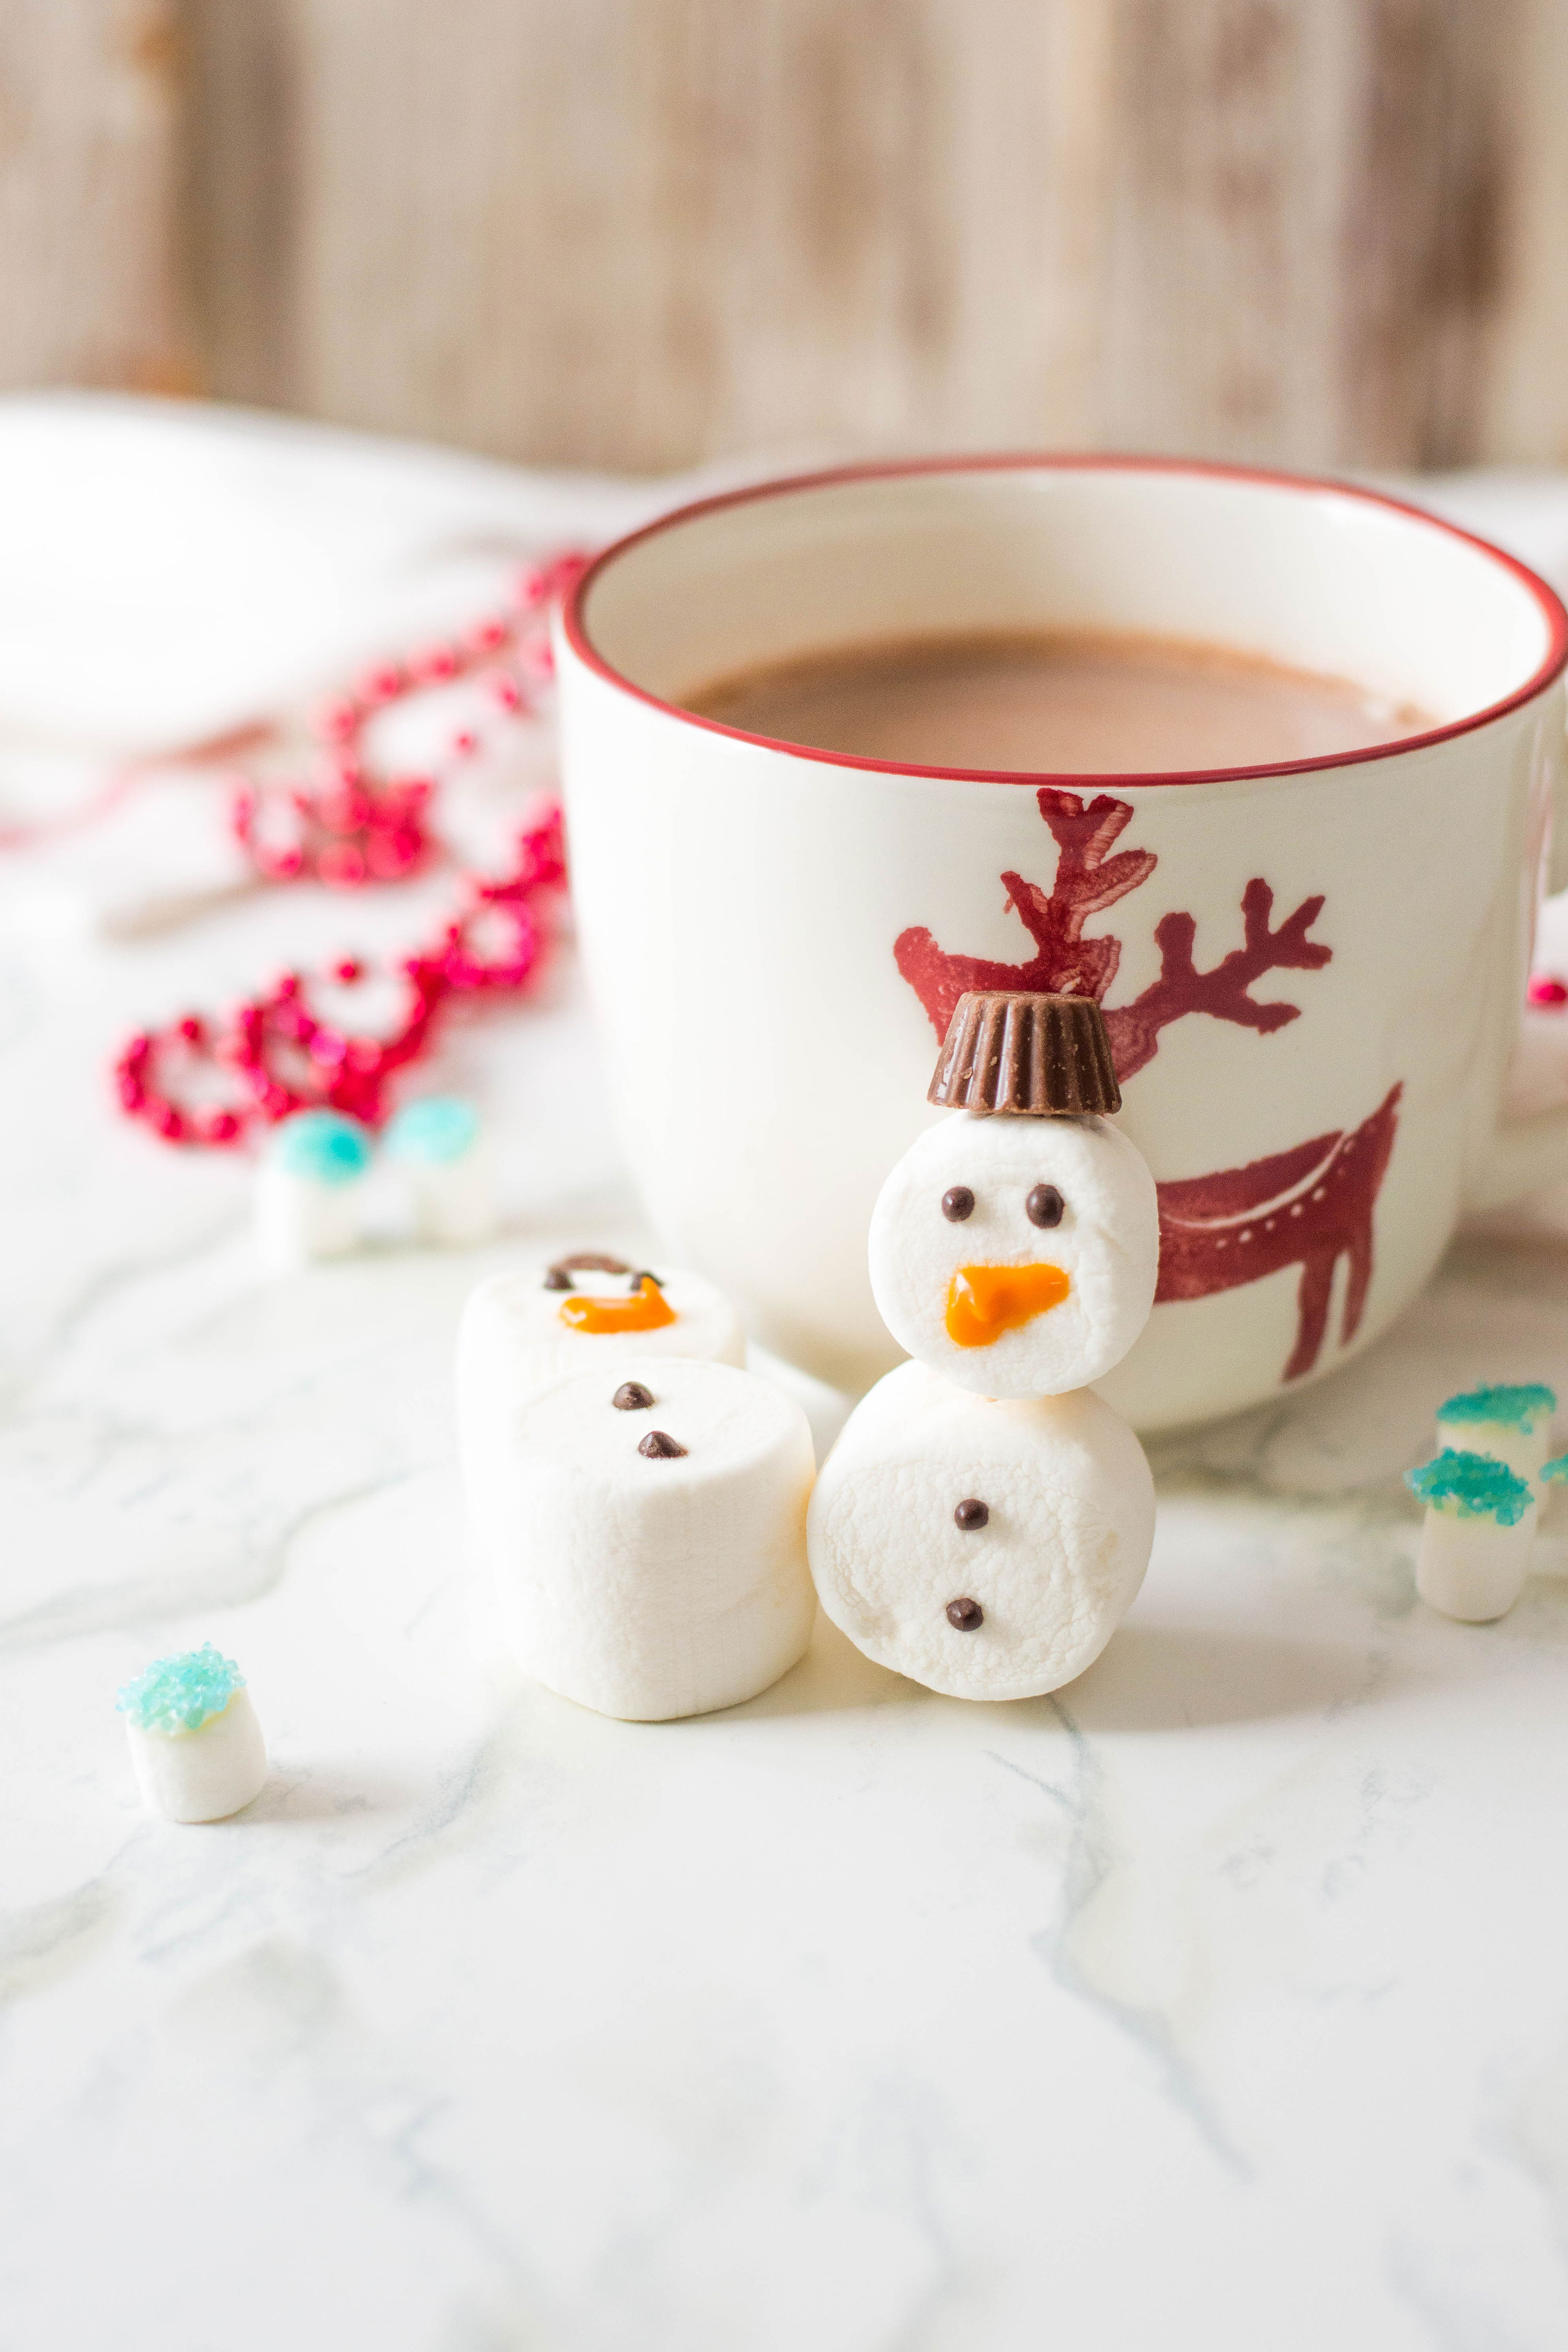 Cute snowman treat standing beside a mug of cocoa.